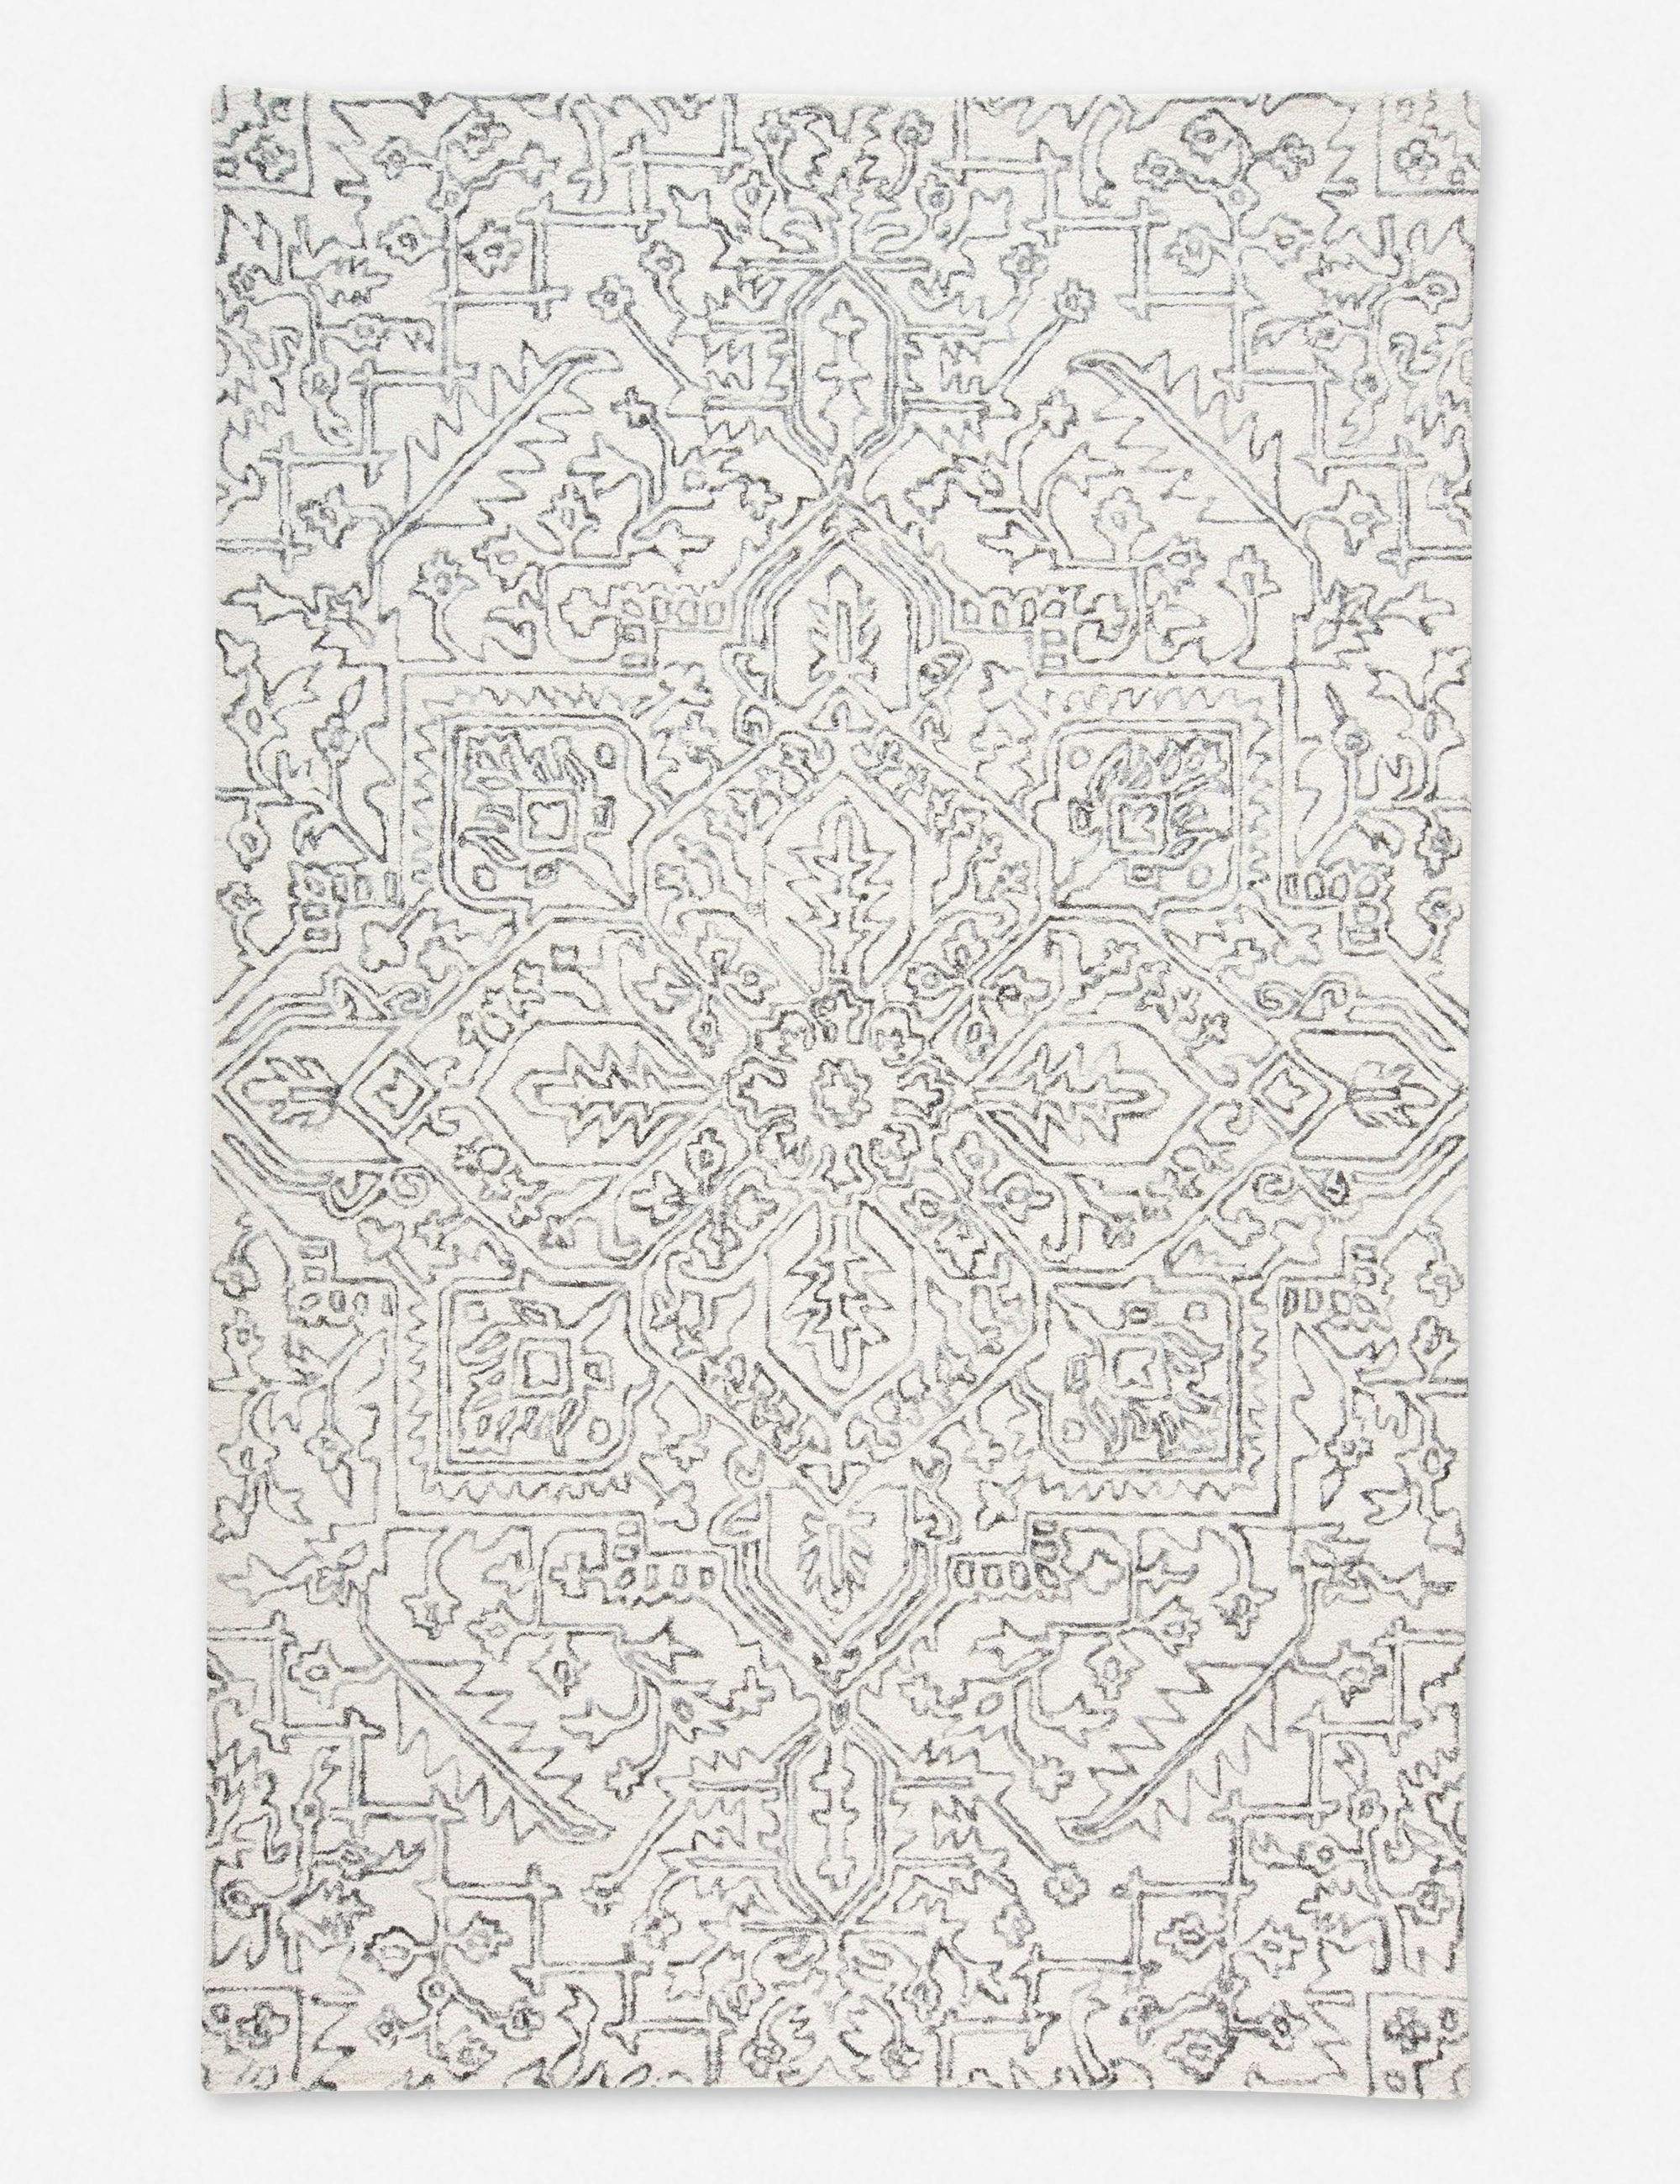 Ivory & Charcoal Hand-Tufted Wool Rectangular Rug - 2' x 3'